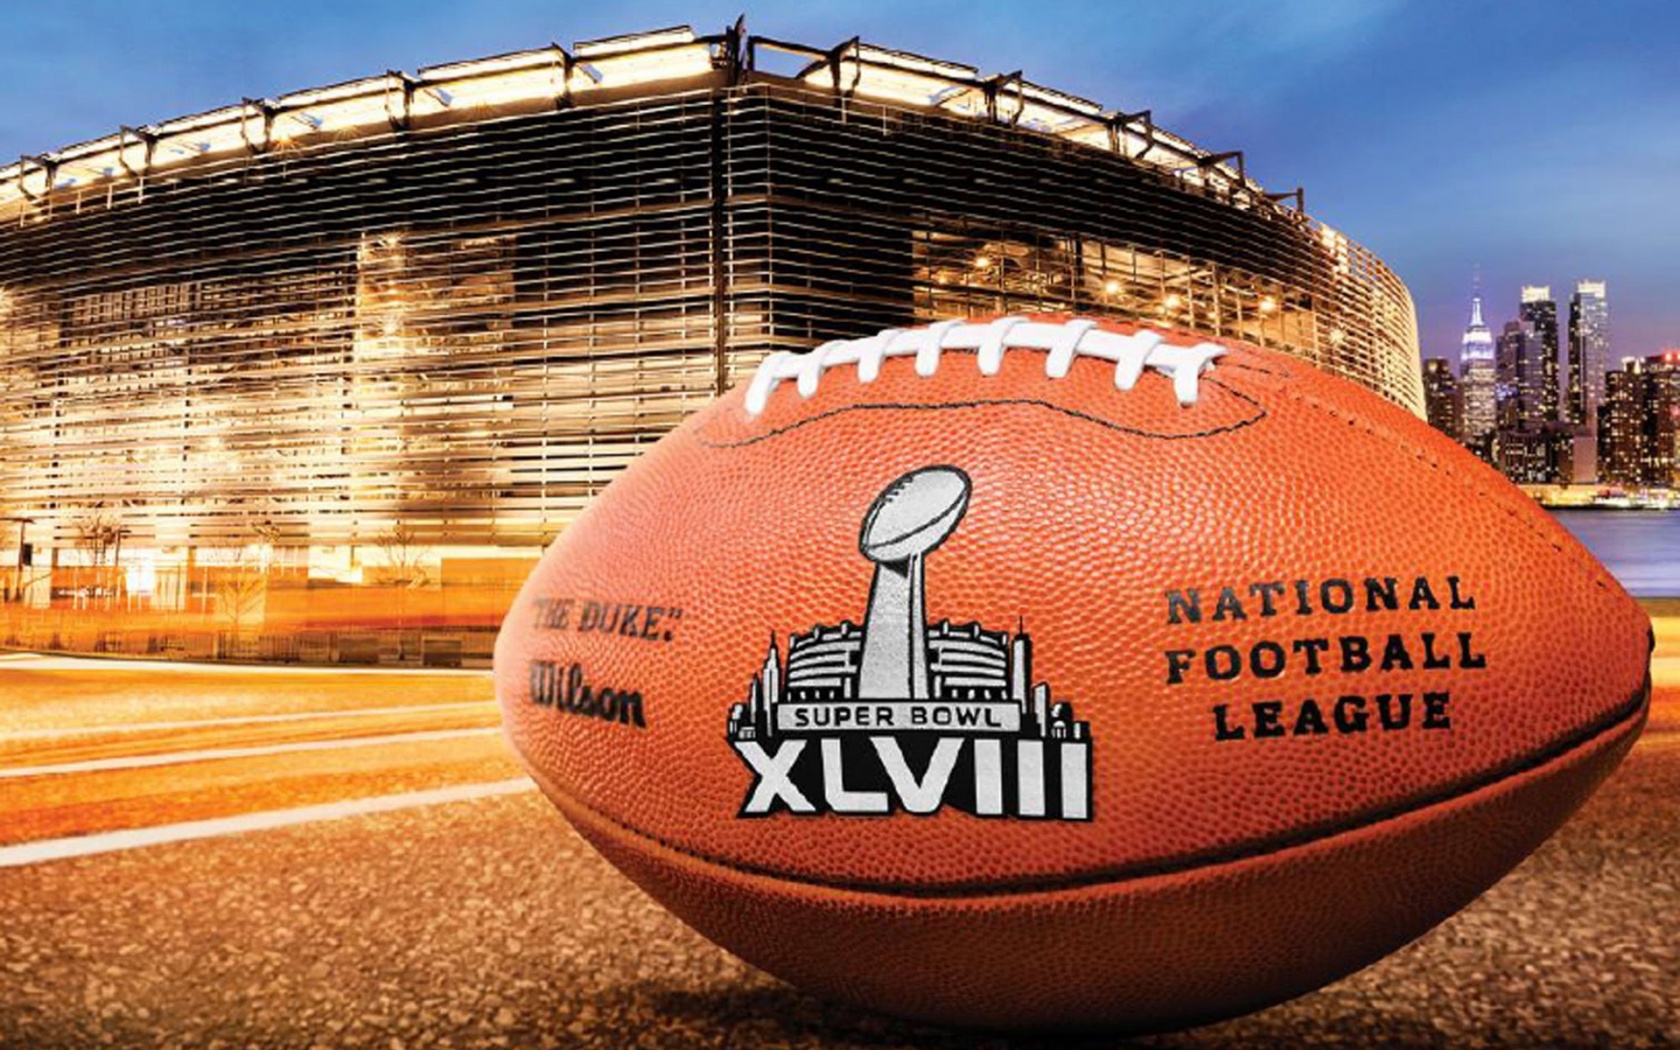 Super Bowl 2014 XLVIII NFL Ball